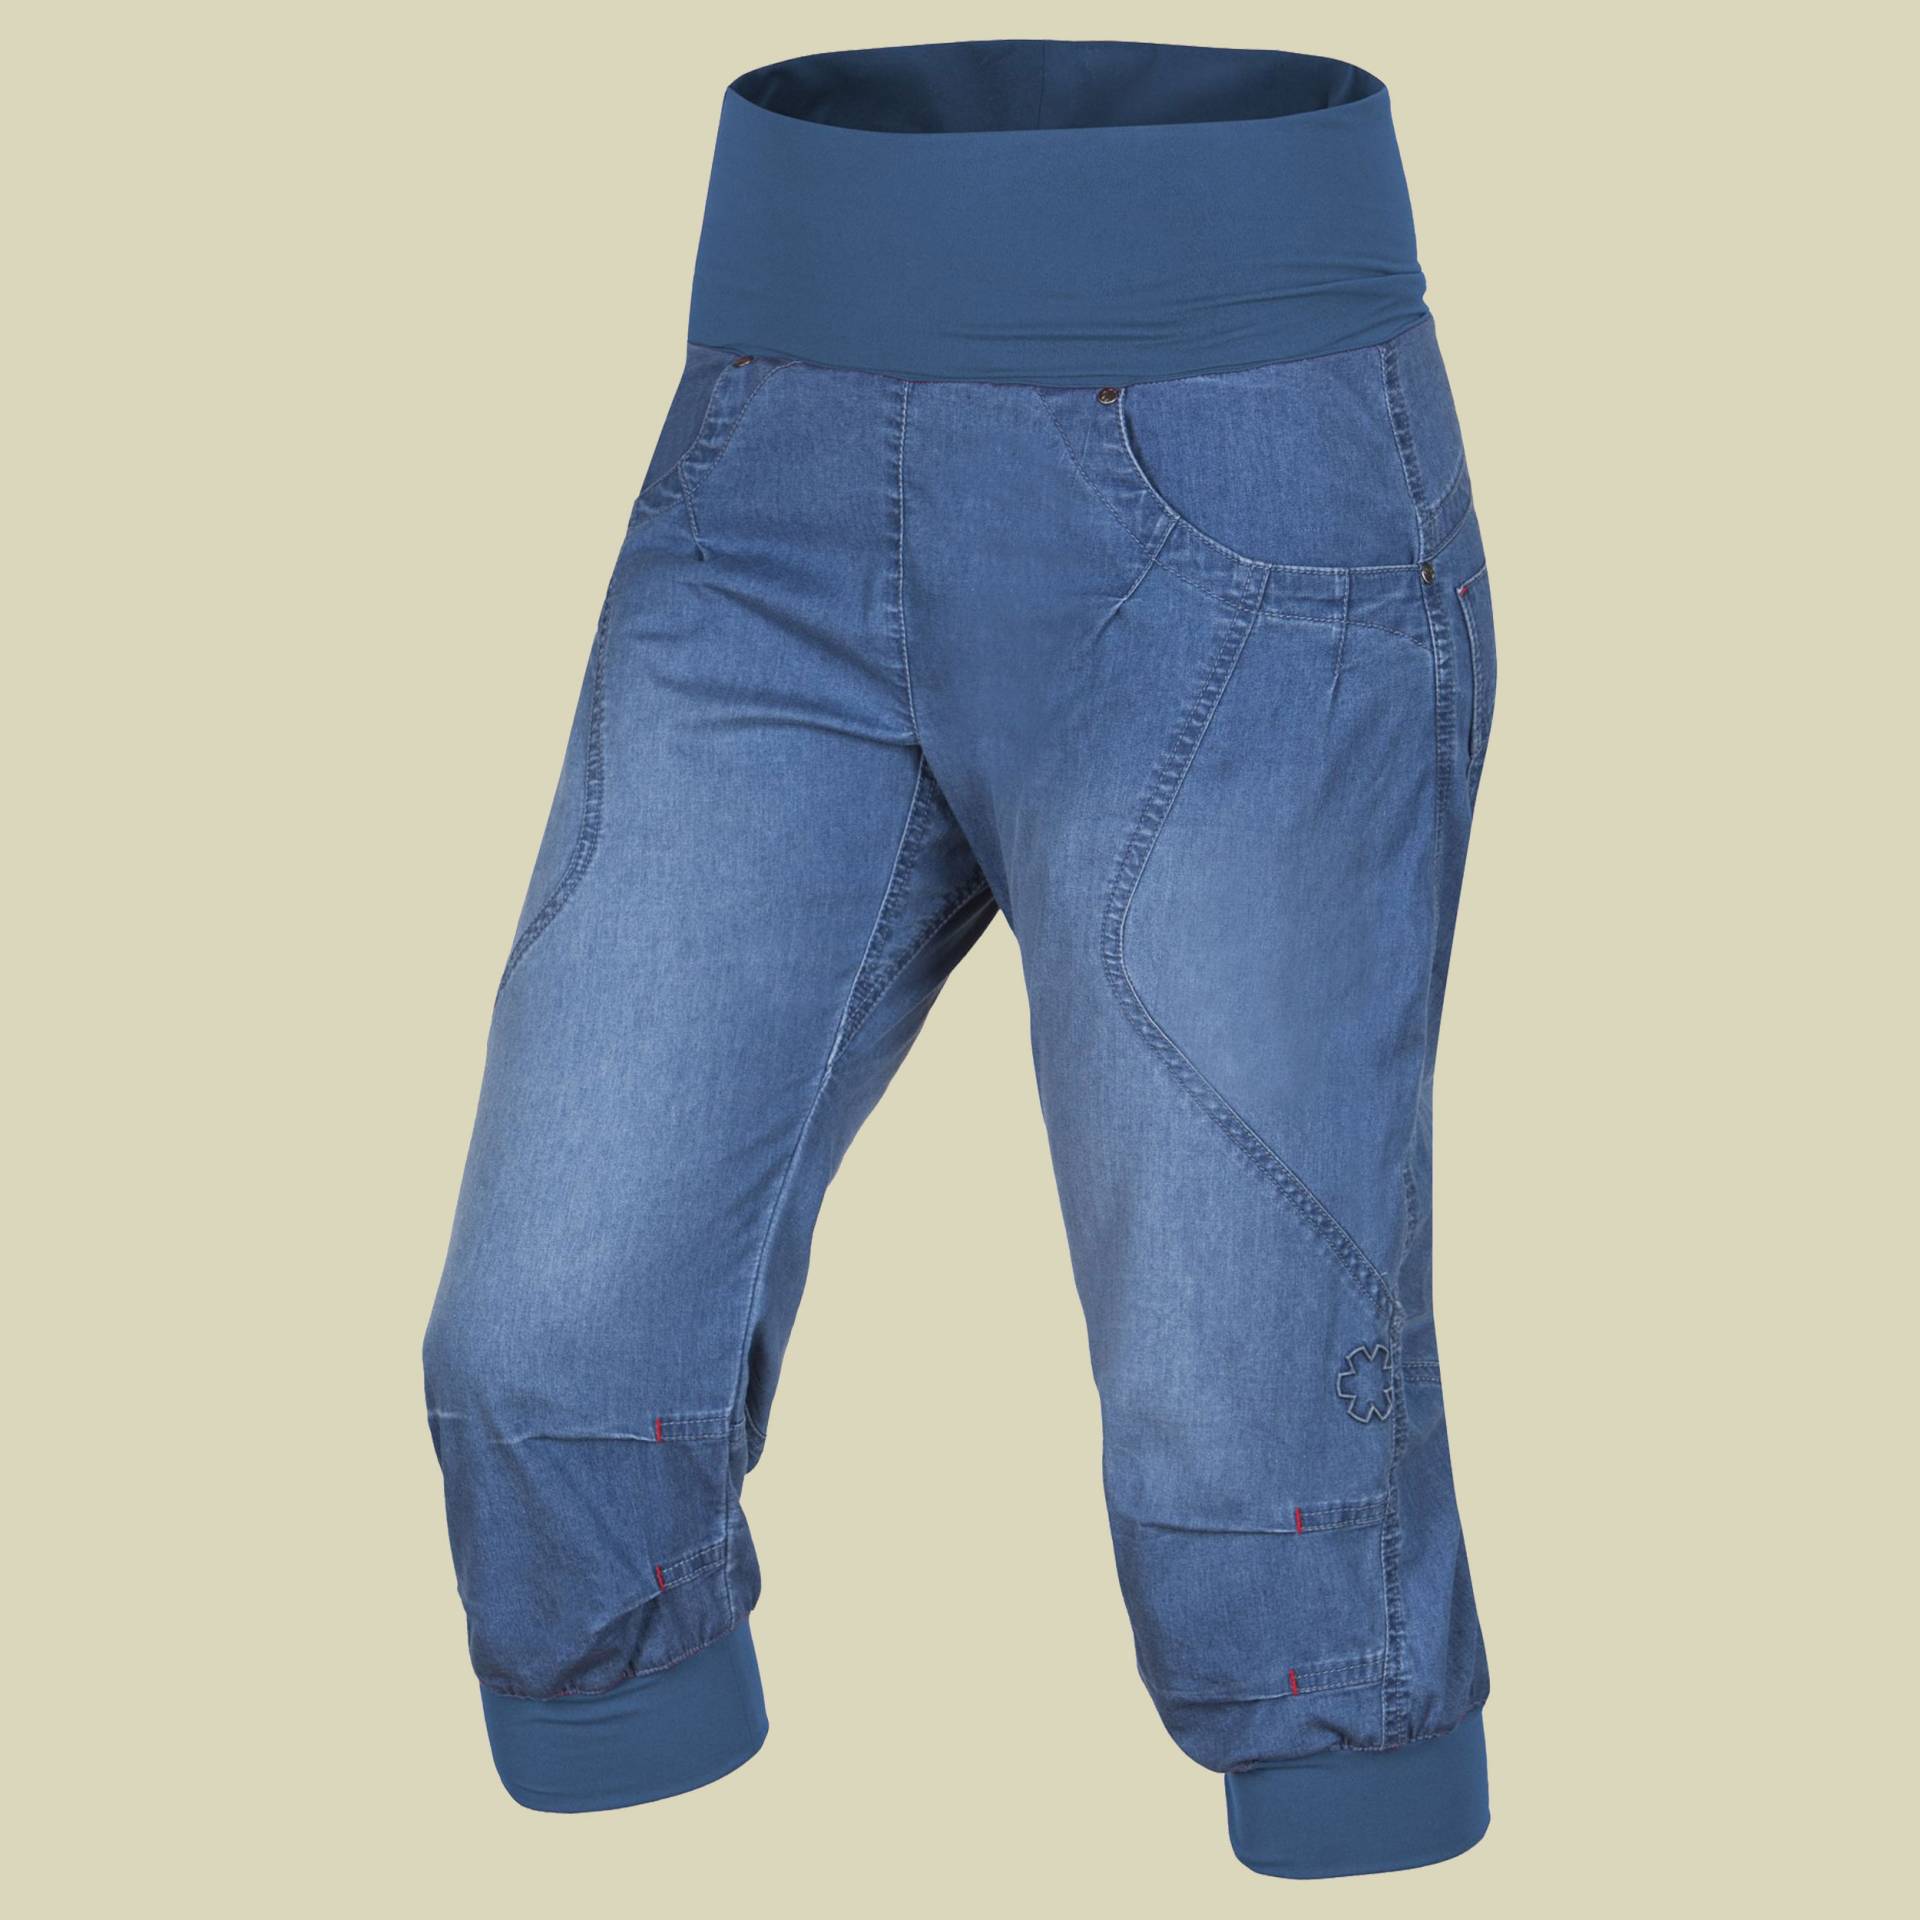 Noya Shorts Jeans Women Größe XS Farbe middle blue von Ocun